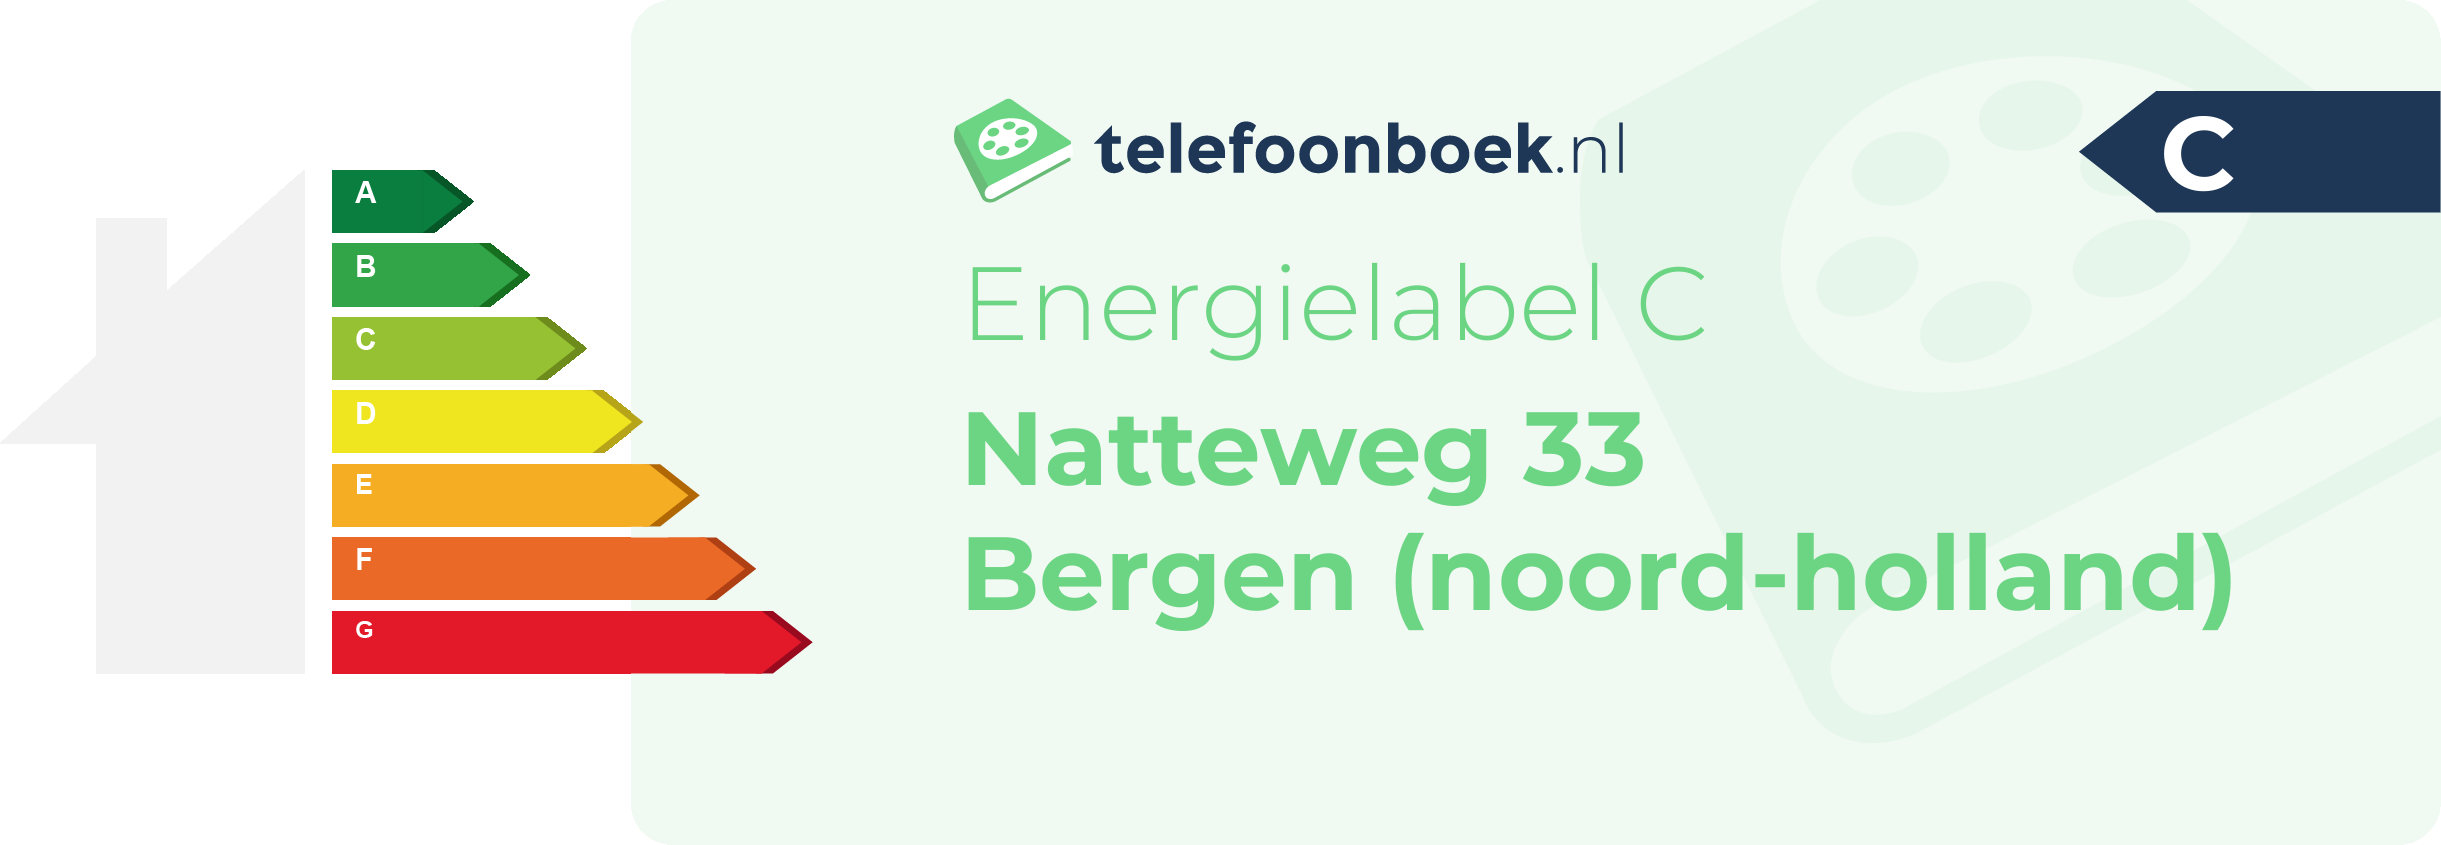 Energielabel Natteweg 33 Bergen (Noord-Holland)